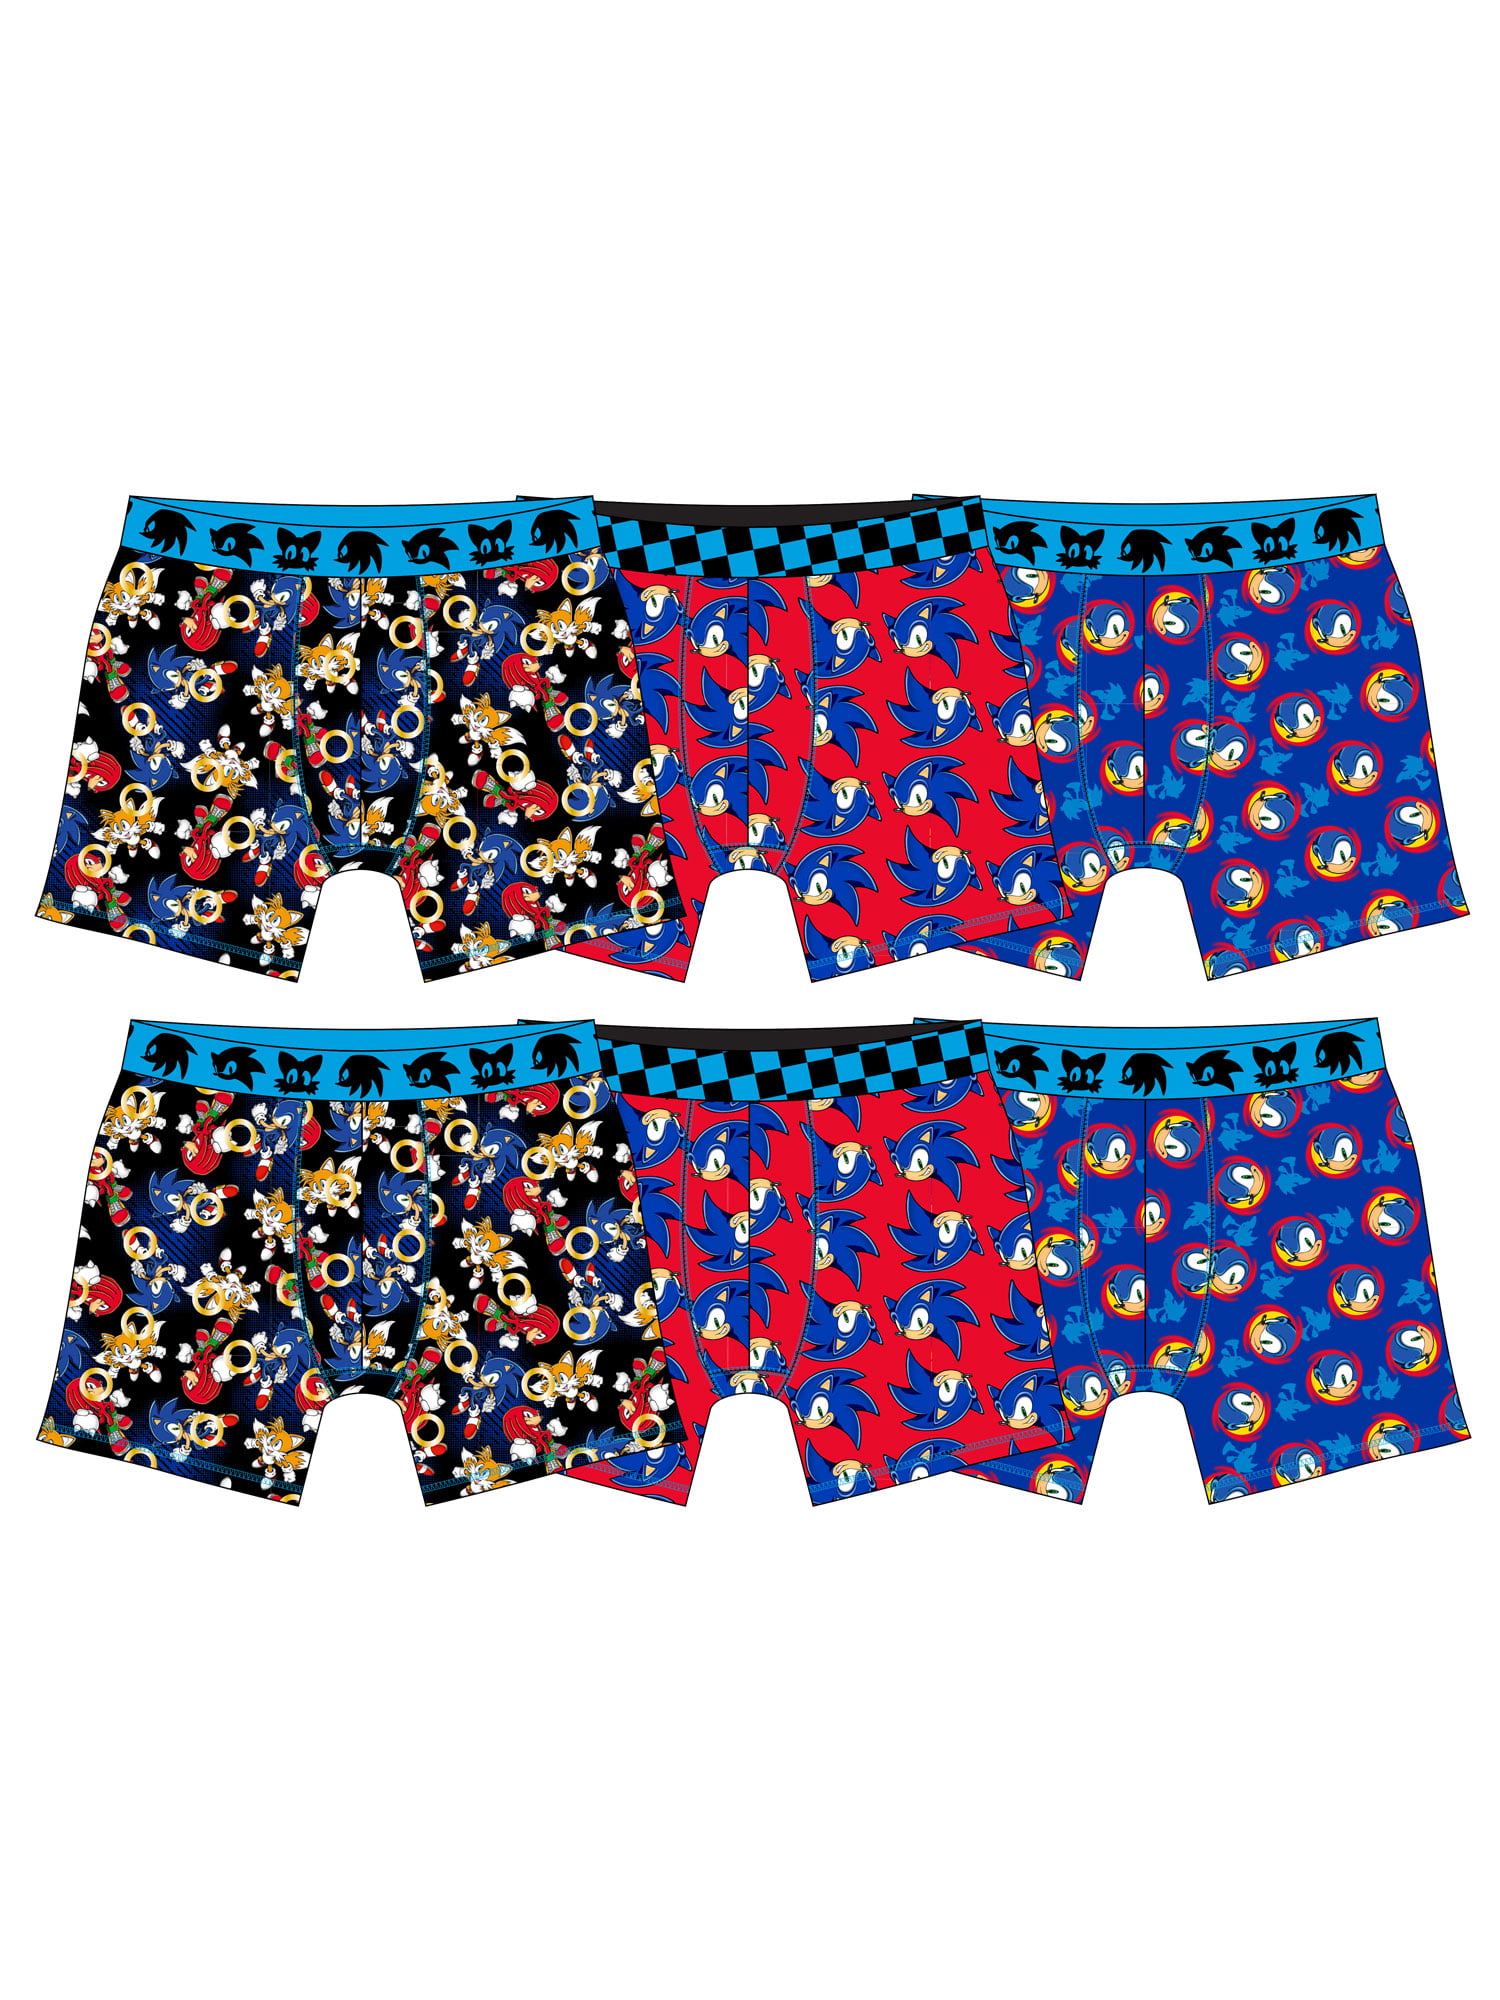 Sonic the Hedgehog Boys Underwear, 6 Pack Boxer Briefs Sizes 4